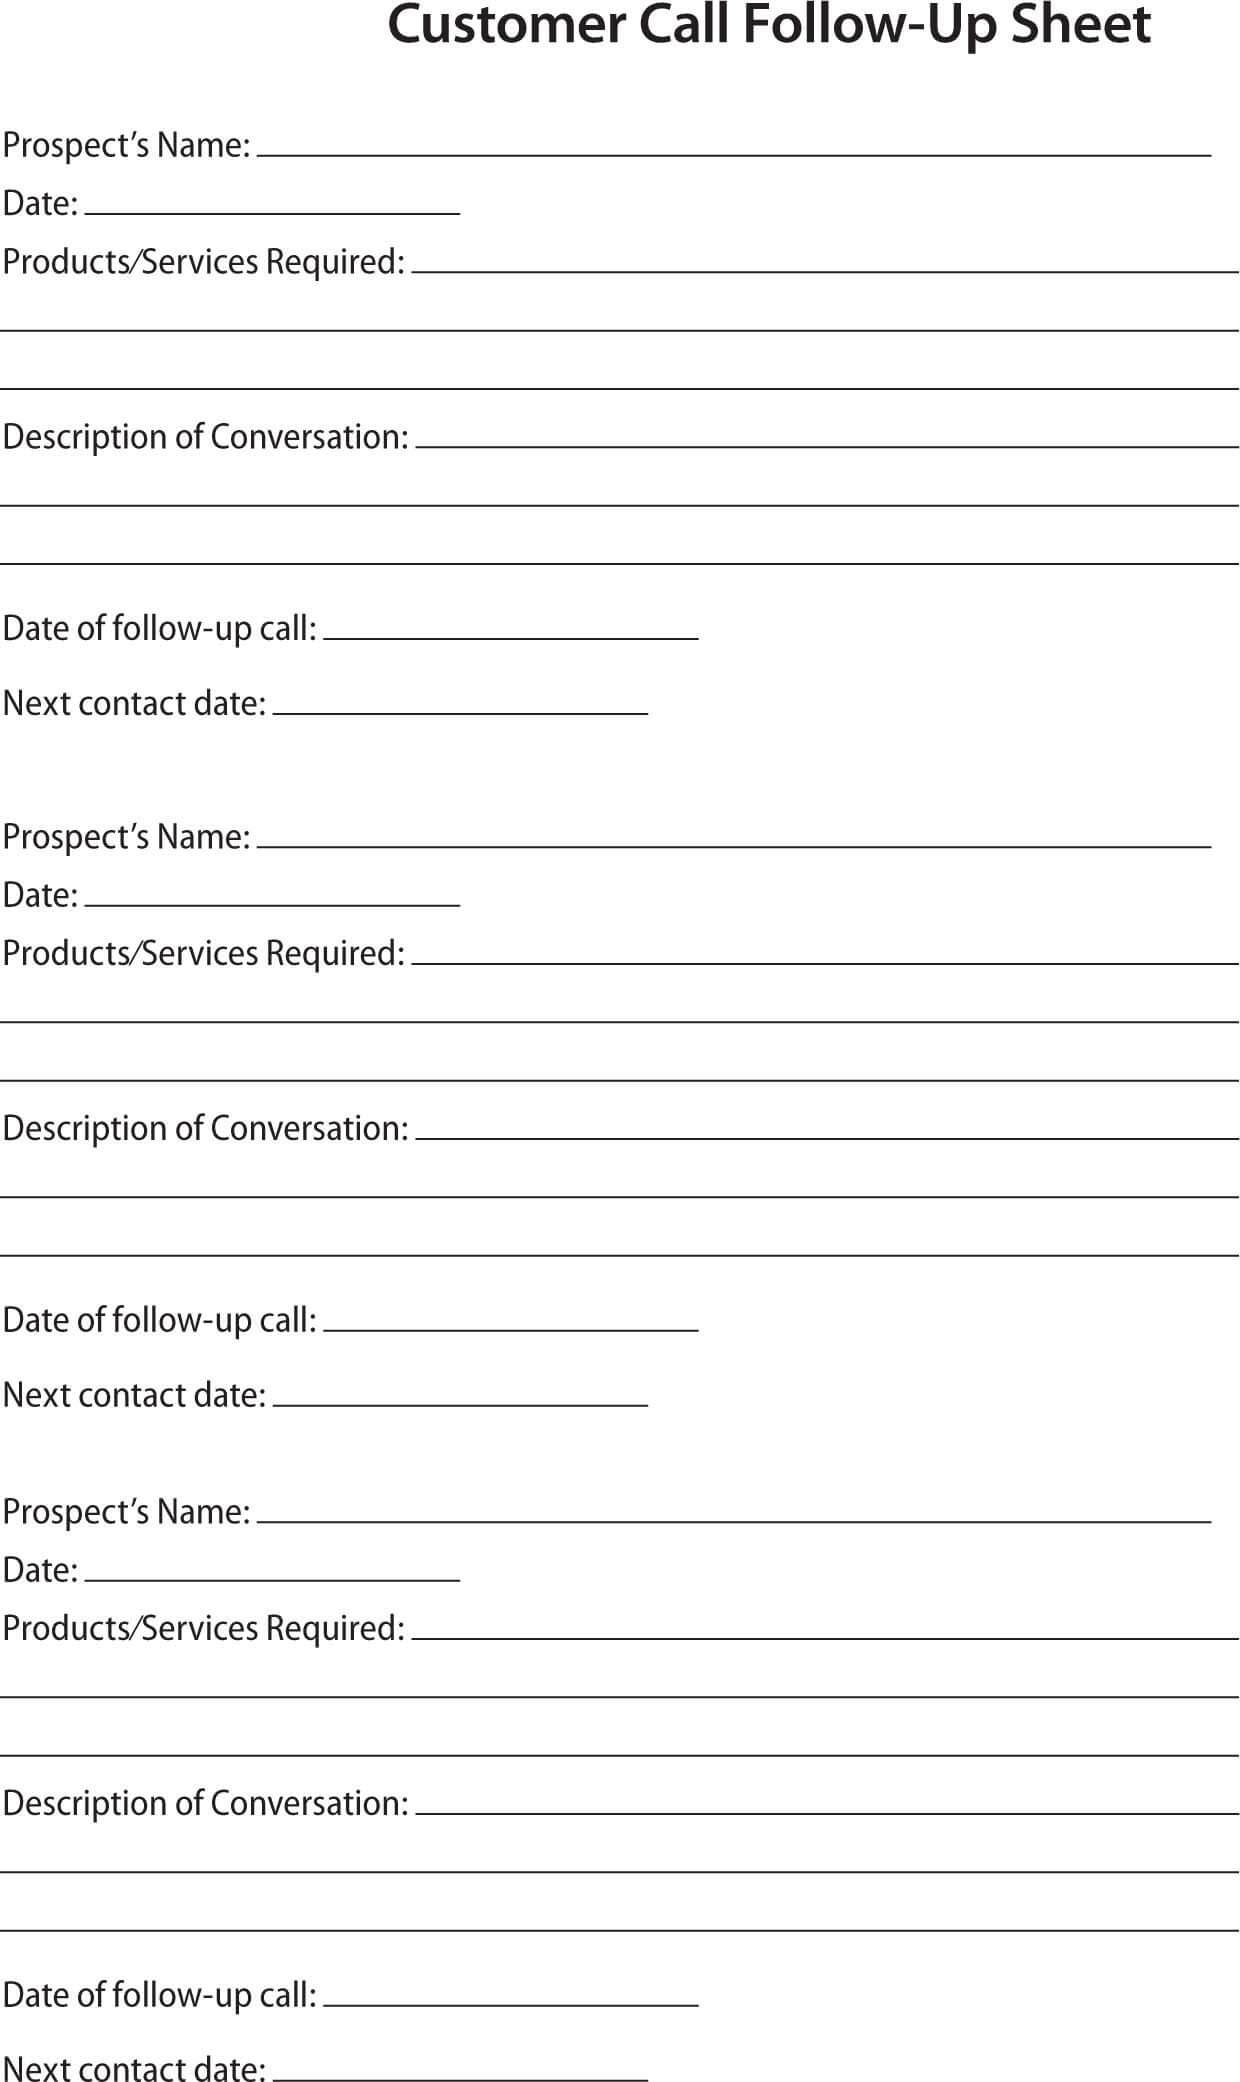 80 20 Prospect Sheet Customer Call Follow Up | Call Sheet Within Customer Contact Report Template